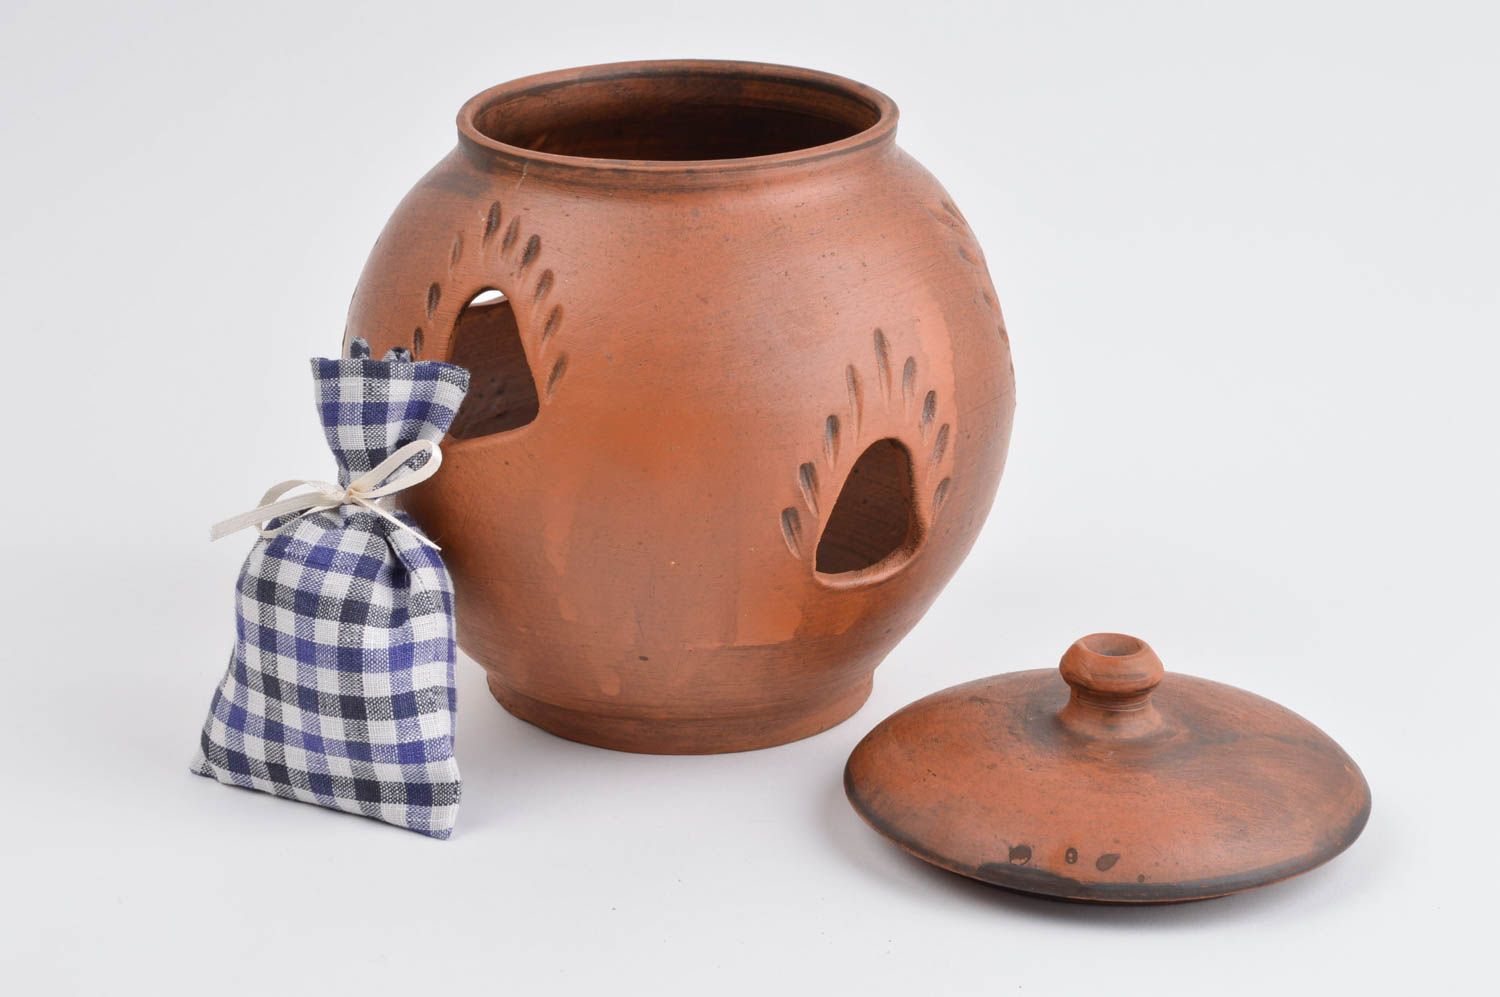 Unusual handmade ceramic pot home goods tableware ideas kitchen supplies photo 1